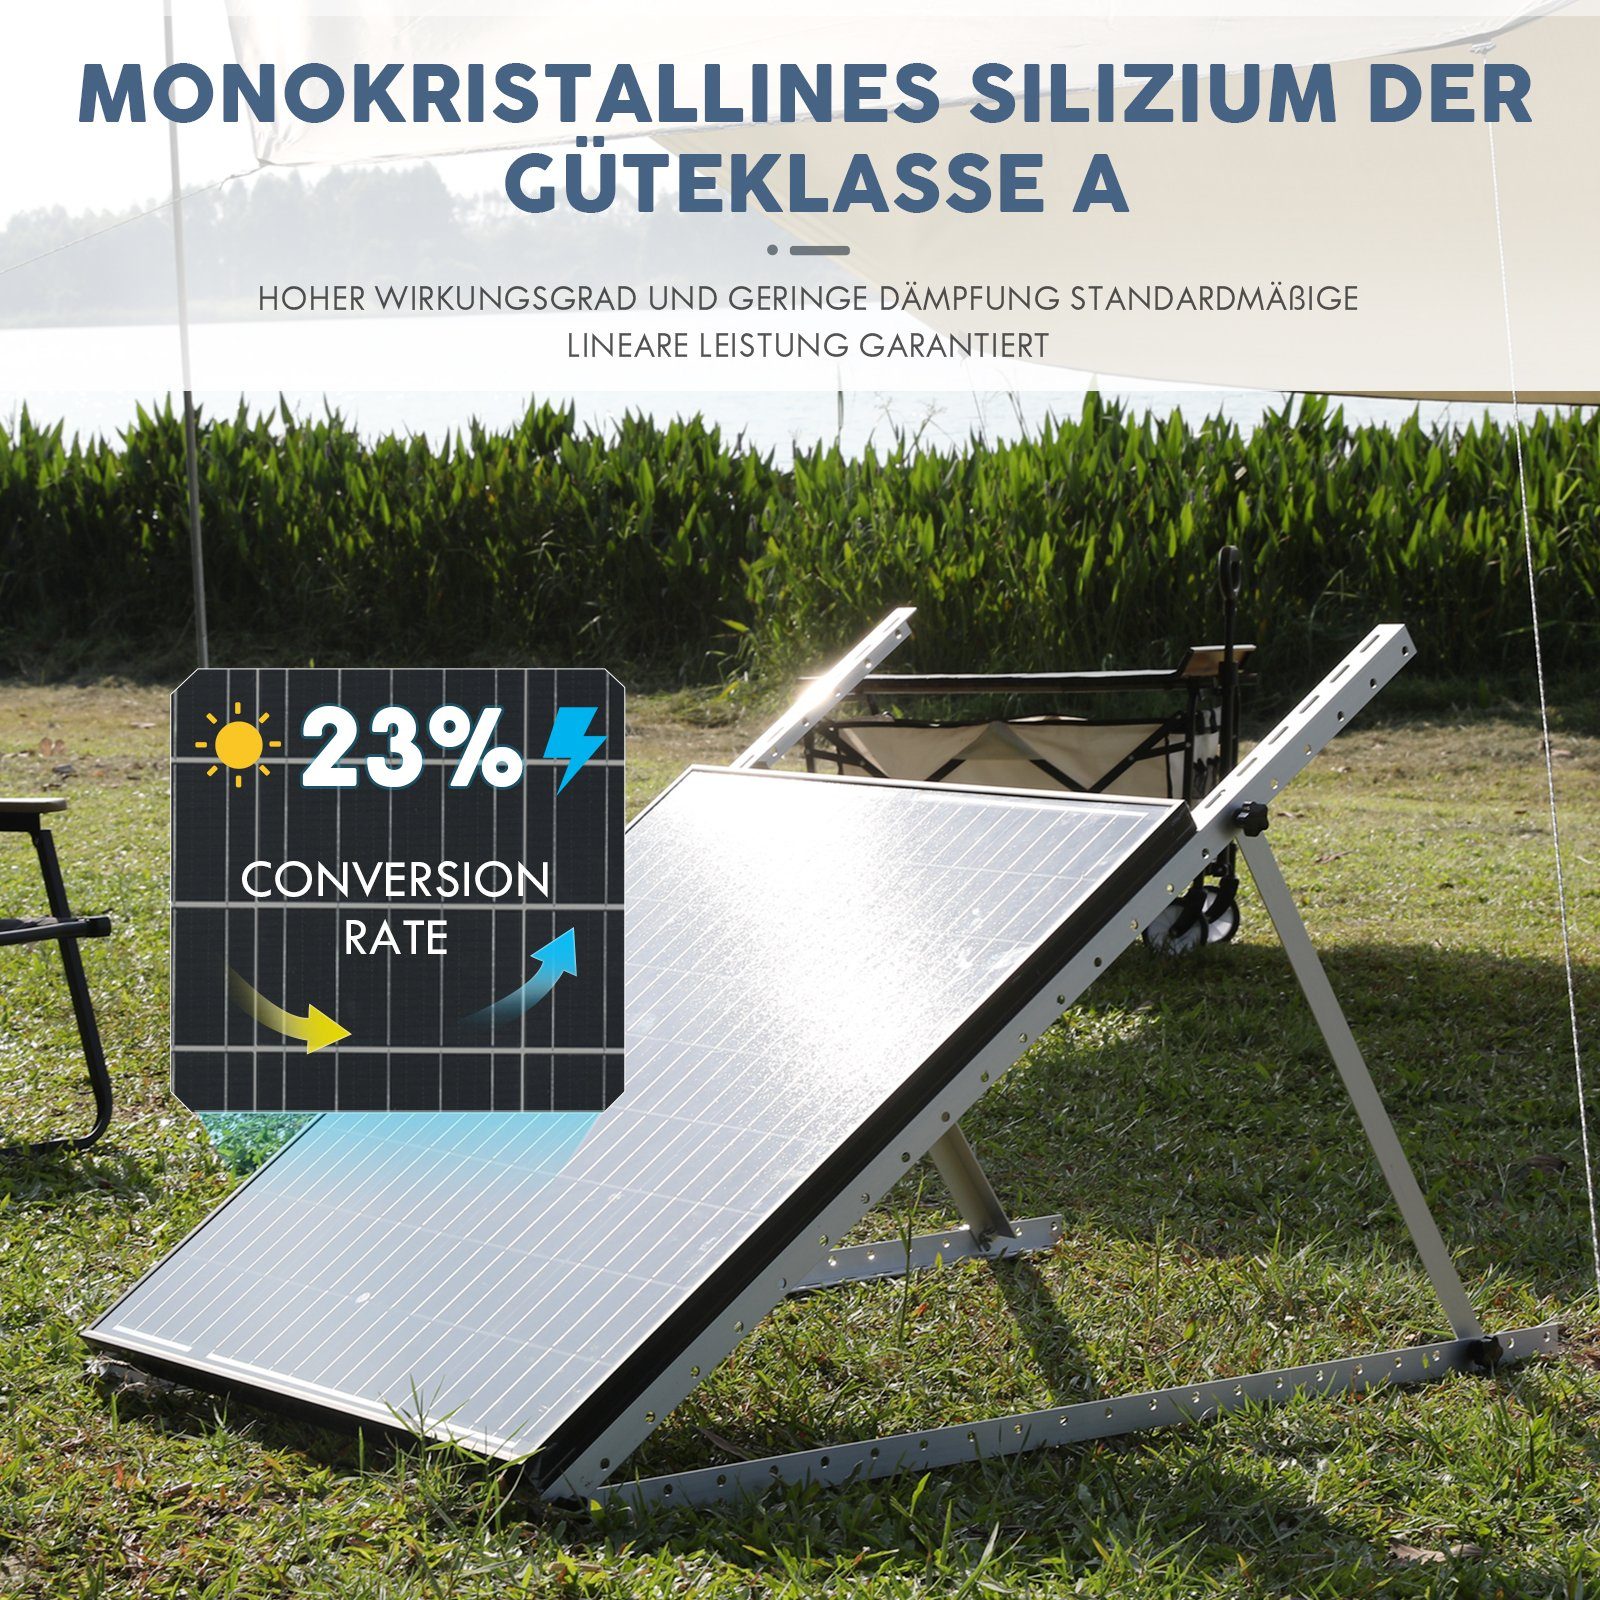 solarmodul kehot Balkonkraftwerk solaranlage Solarpanel pool sonnenkollektor Solaranlage